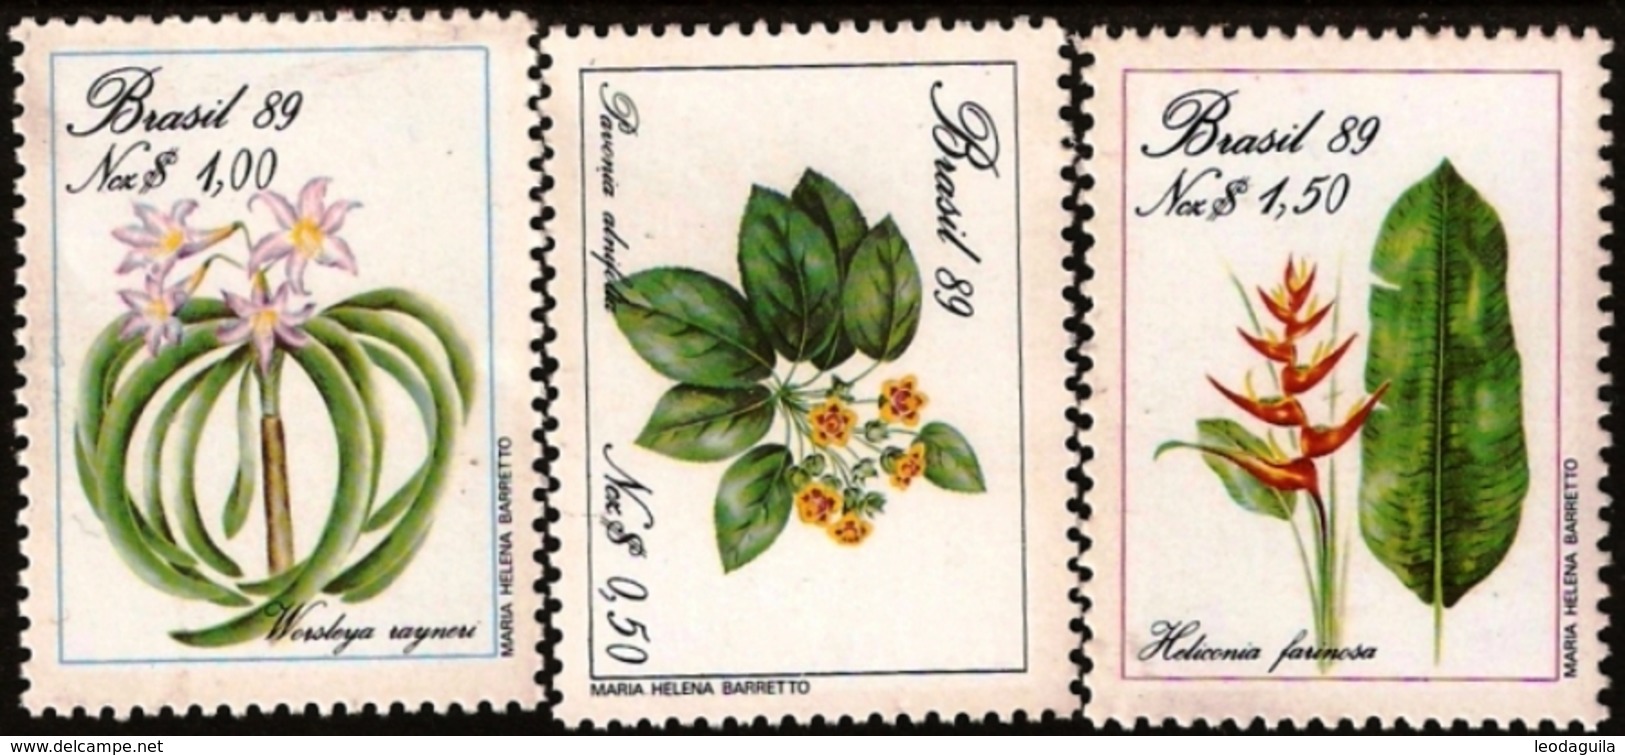 BRAZIL #2168-70 - PRESERVATION OF THE BRAZILIAN FLORA -  FLOWERING PLANTS  -  1989 - Unused Stamps